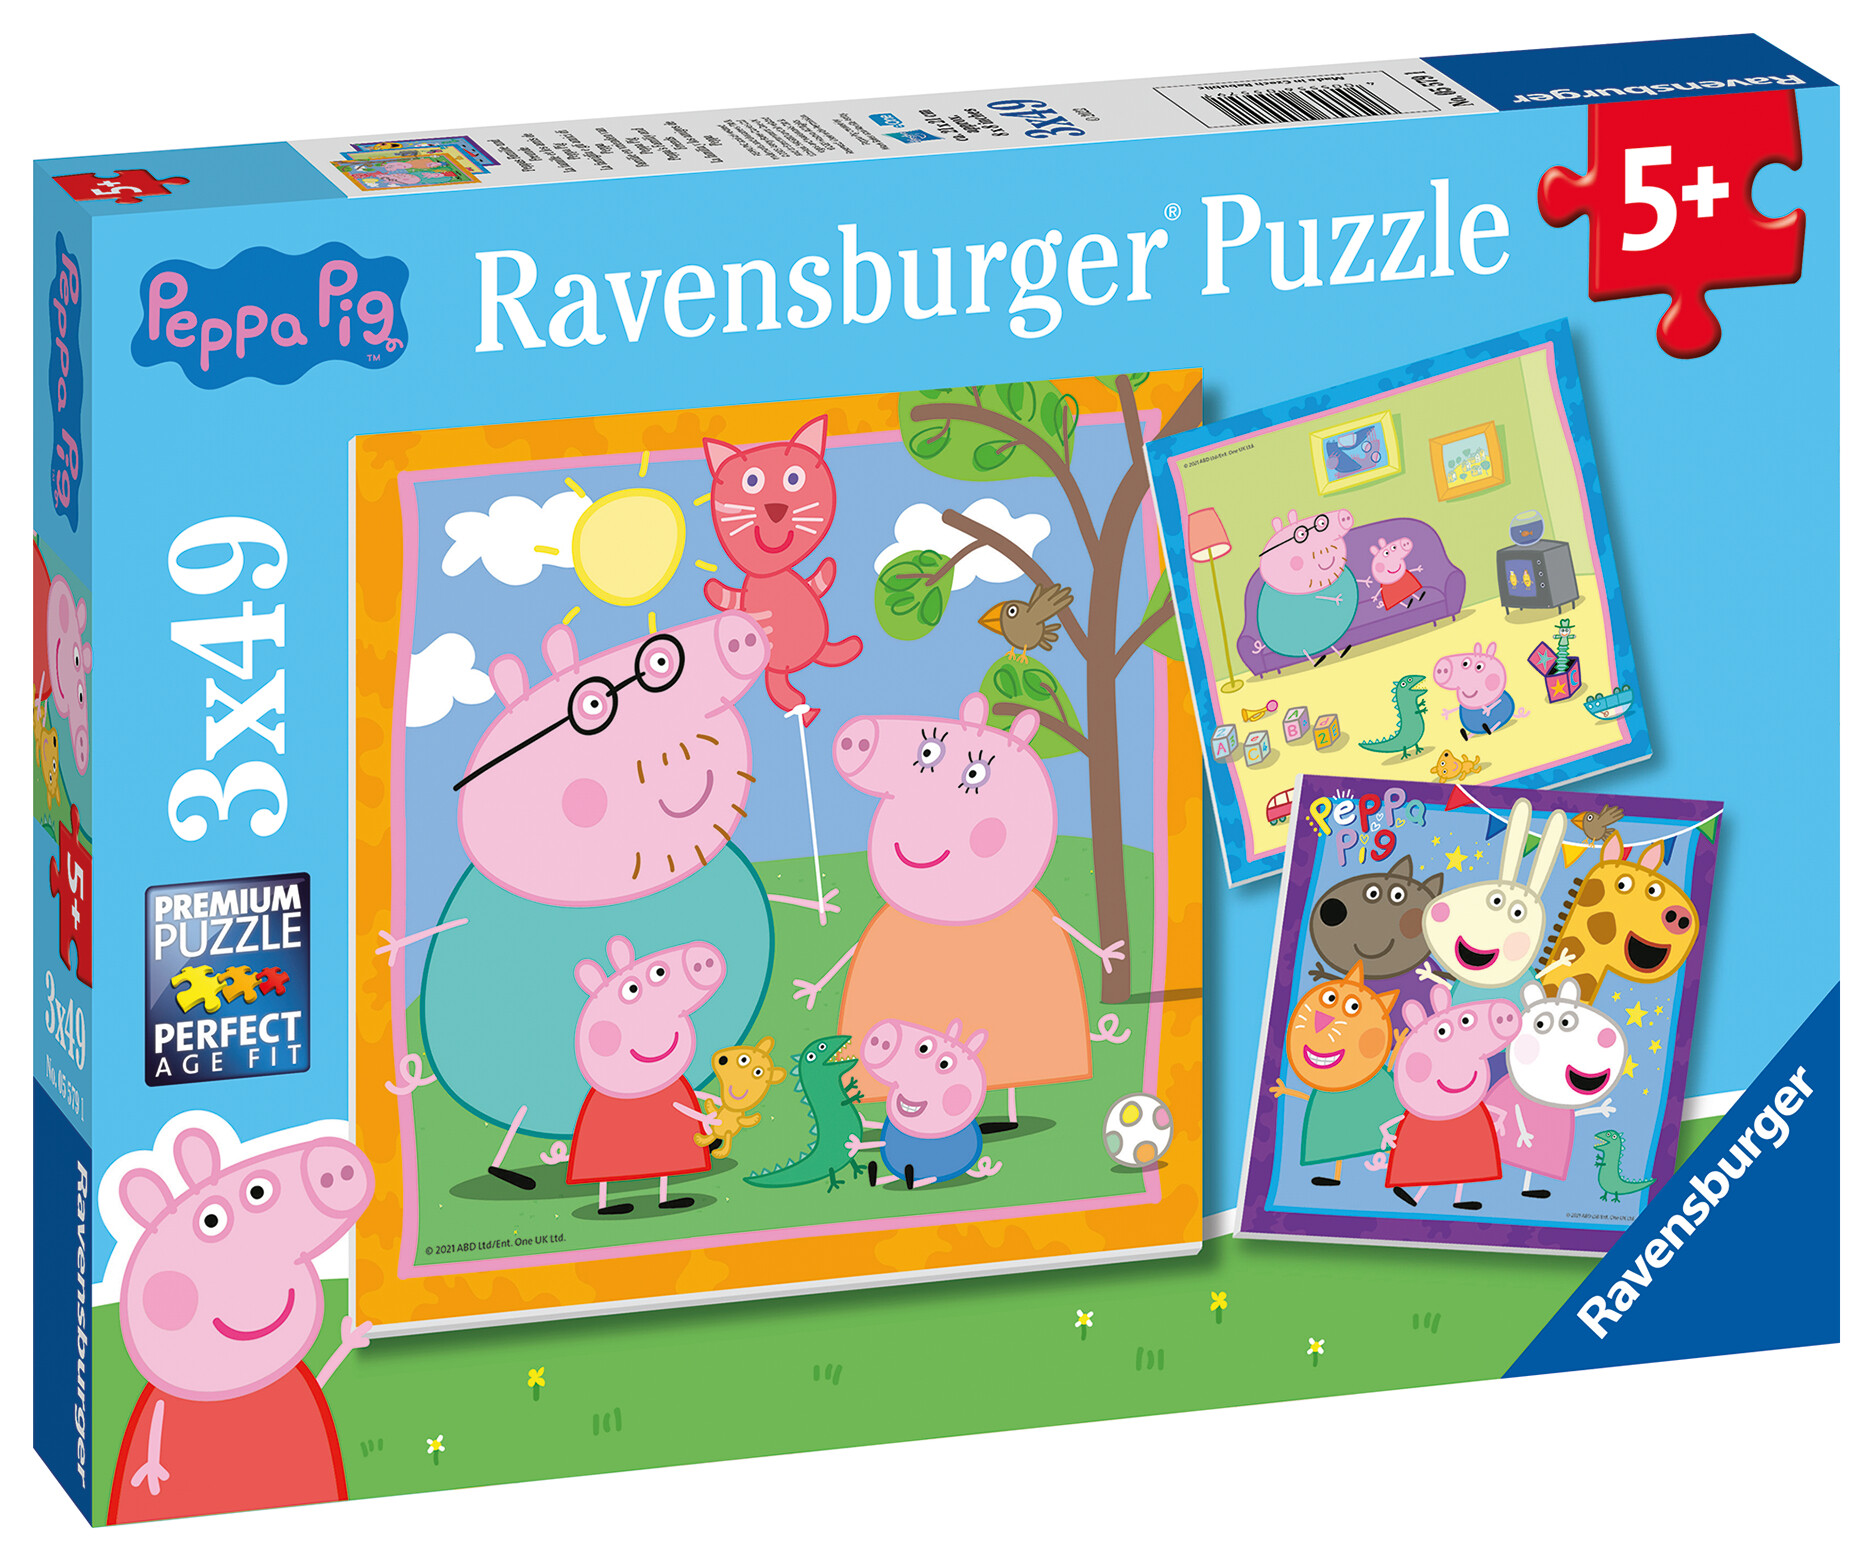 Ravensburger - puzzle peppa pig, collezione 3x49, 3 puzzle da 49 pezzi, età raccomandata 5+ anni - PEPPA PIG, RAVENSBURGER